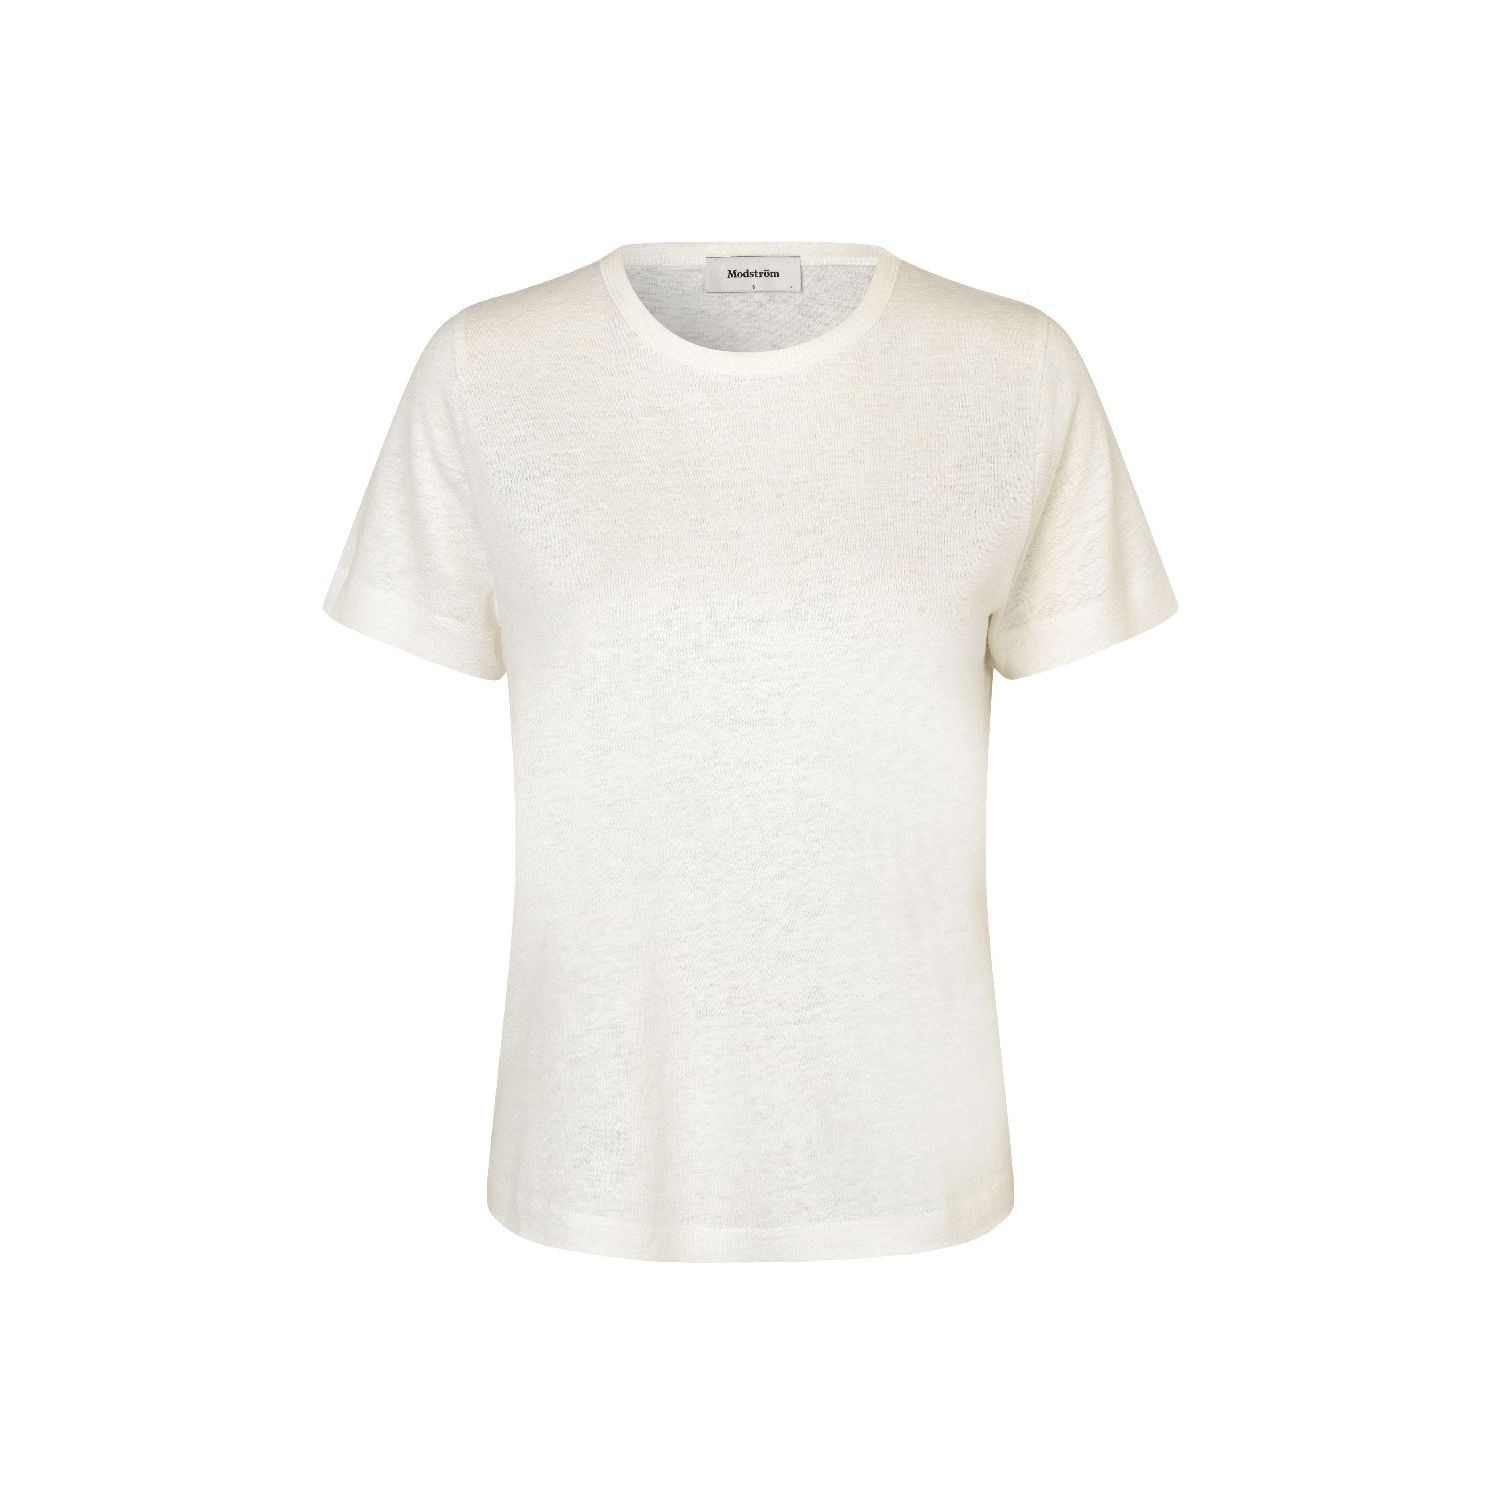 Modström holt t-shirt soft white